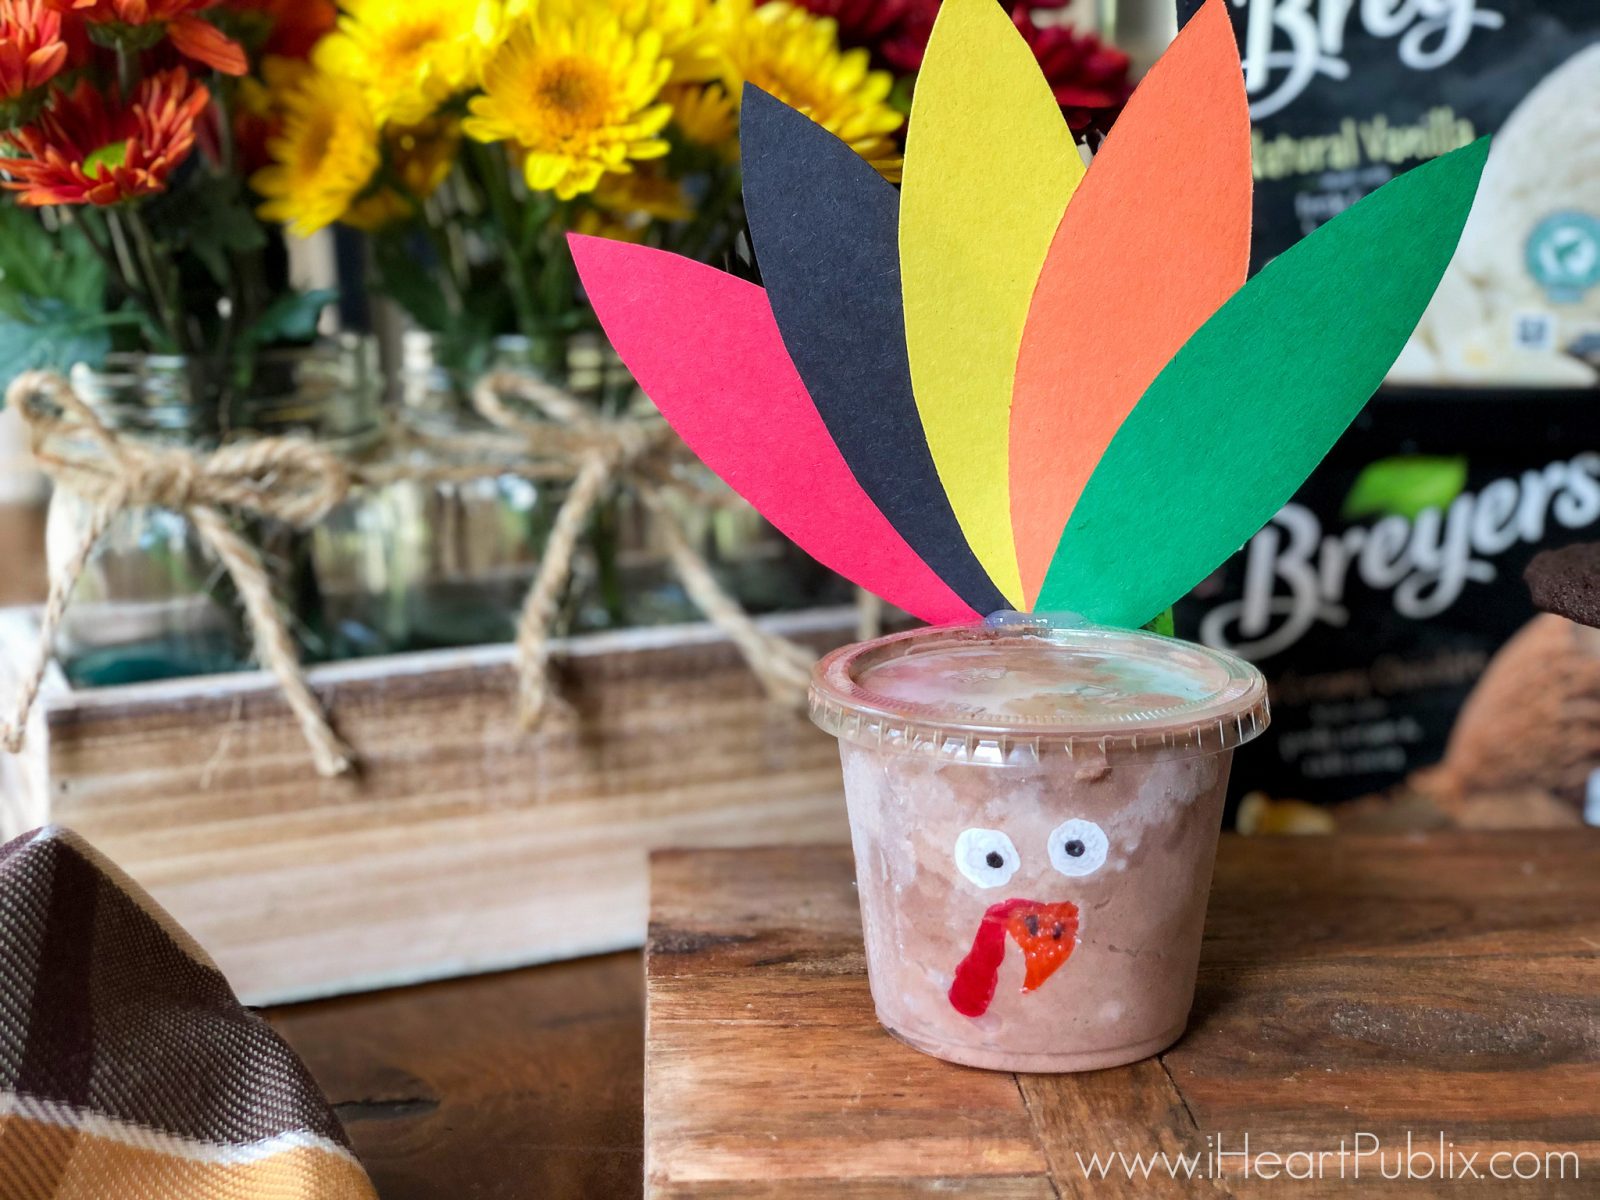 Fun & Festive Thanksgiving Treats – Breyers Turkey & Pilgrim Ice Cream Cups